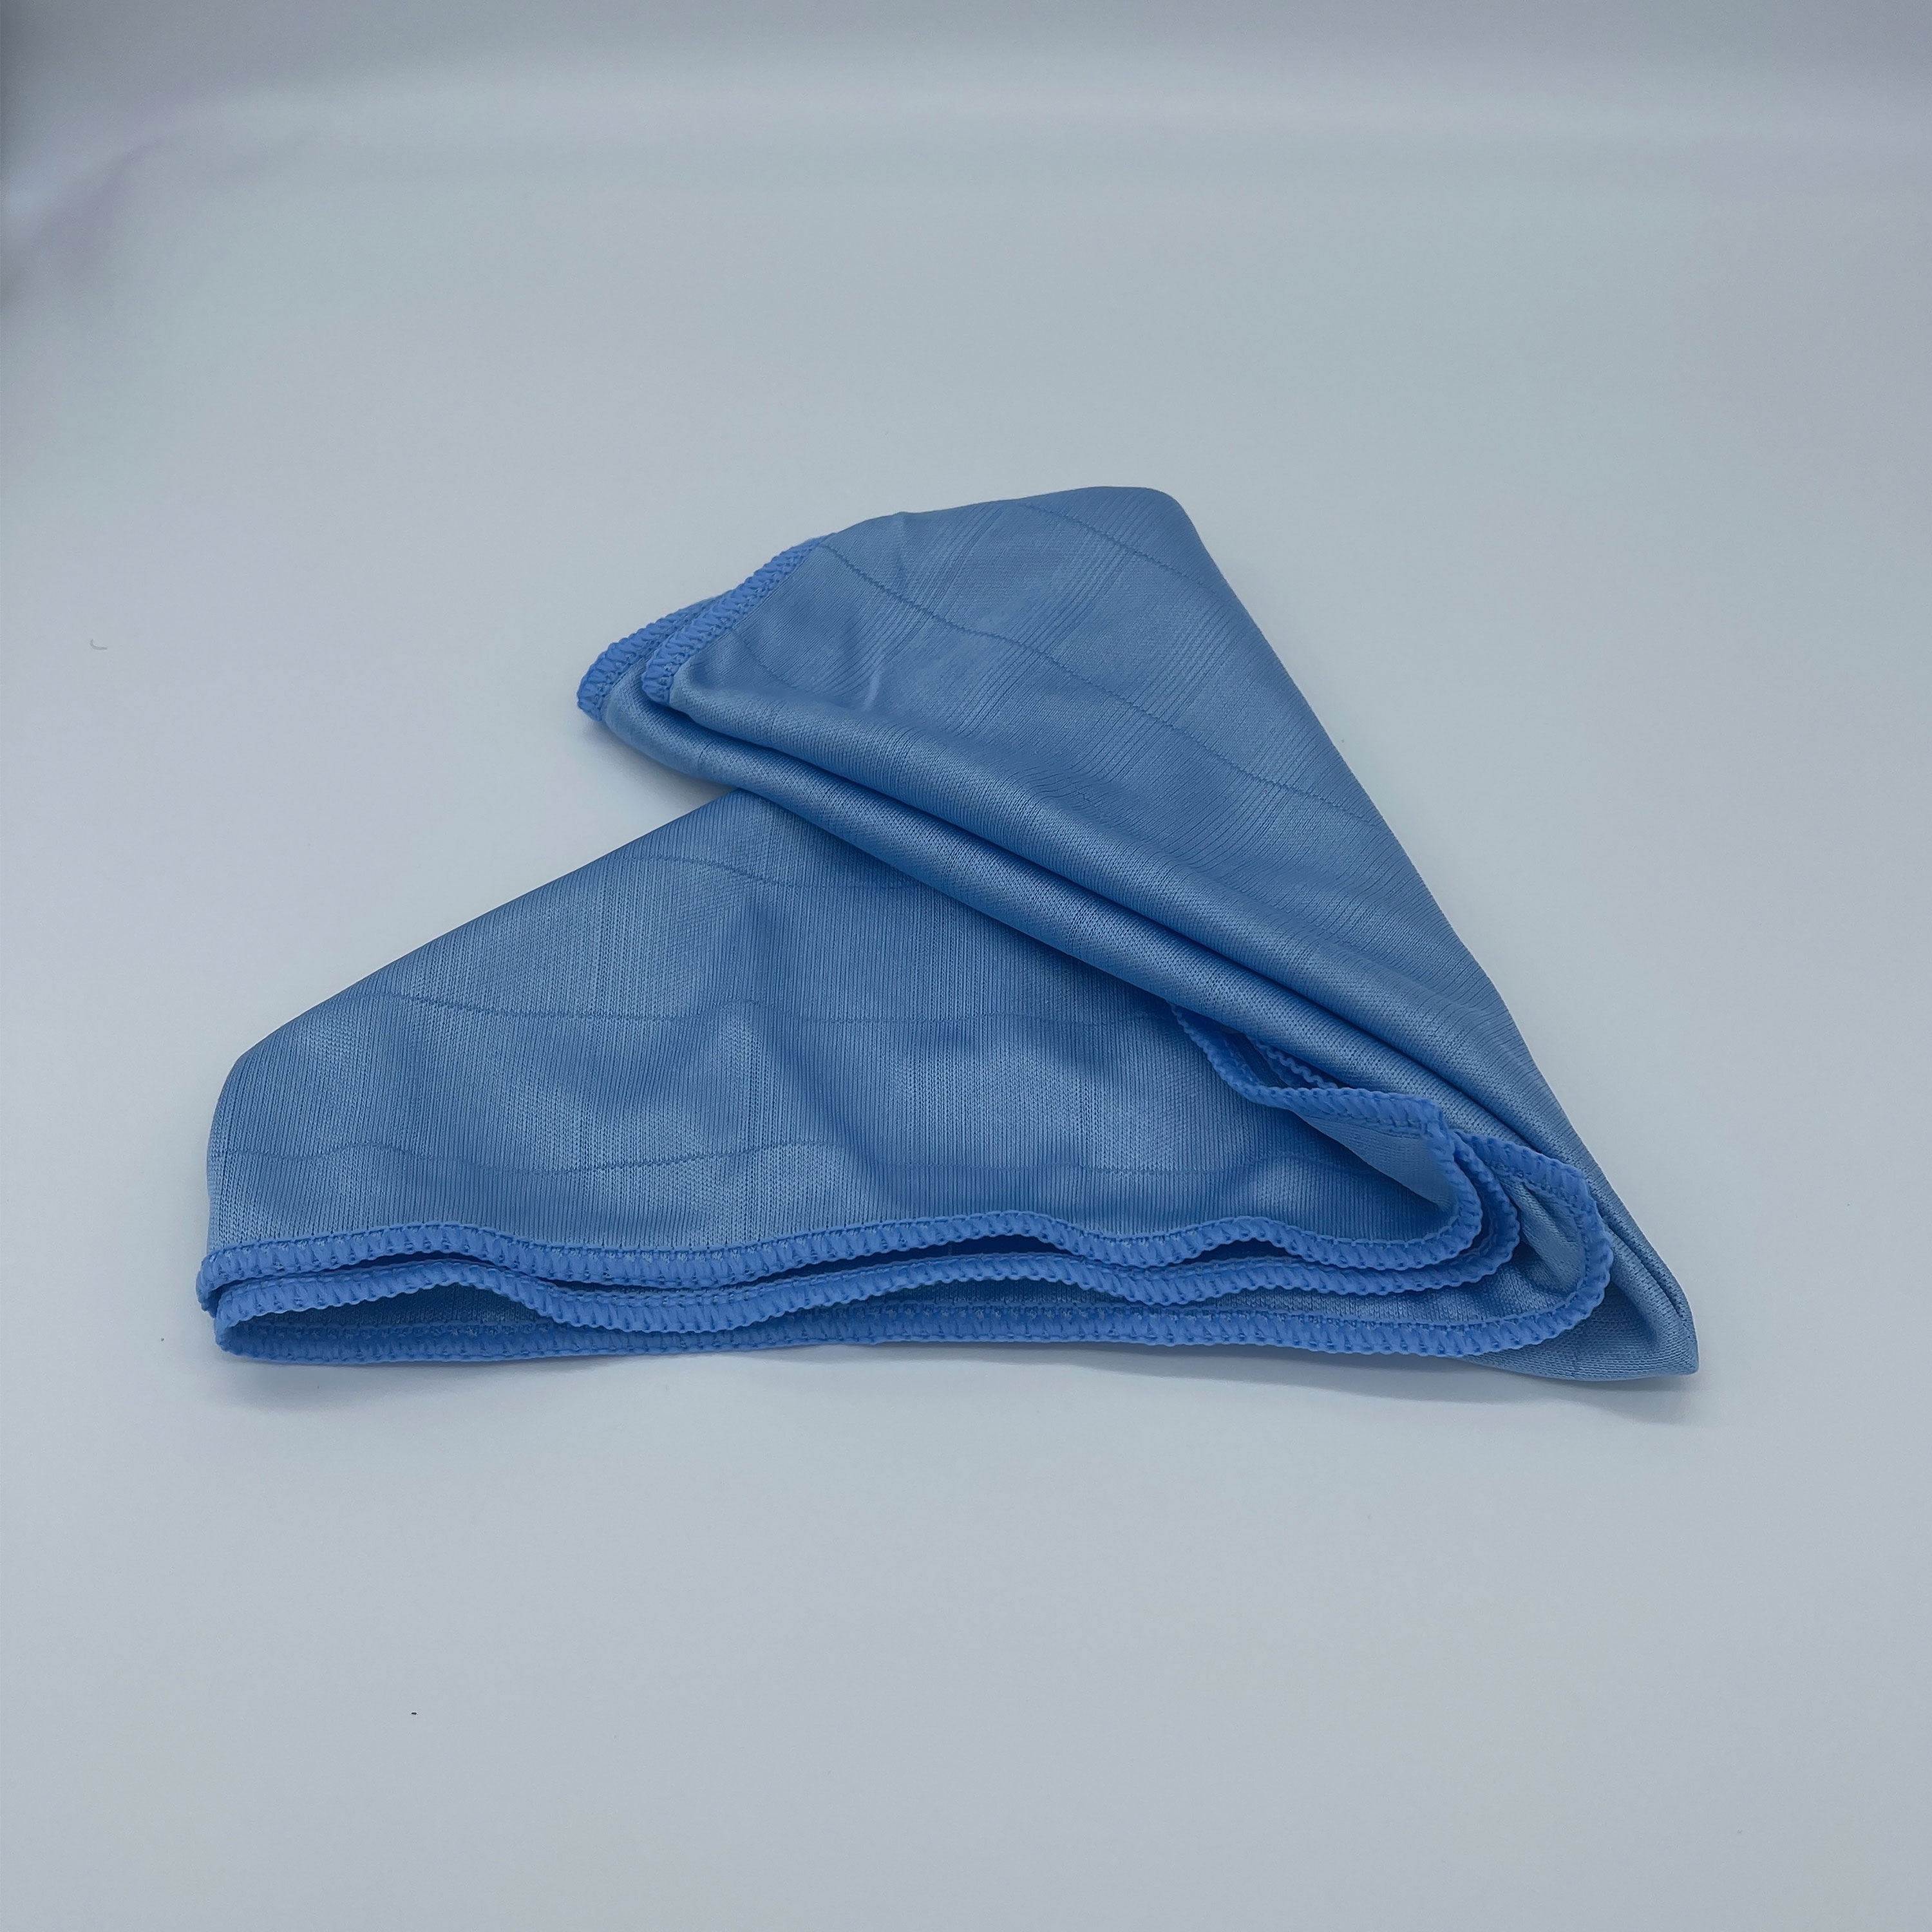 AIDEA Dish Cloth Microfiber-8PK, 12”x12”, Super Soft and Absorbent,  Multi-Purpose Microfiber Dish Rags for Kitchen-White/Blue